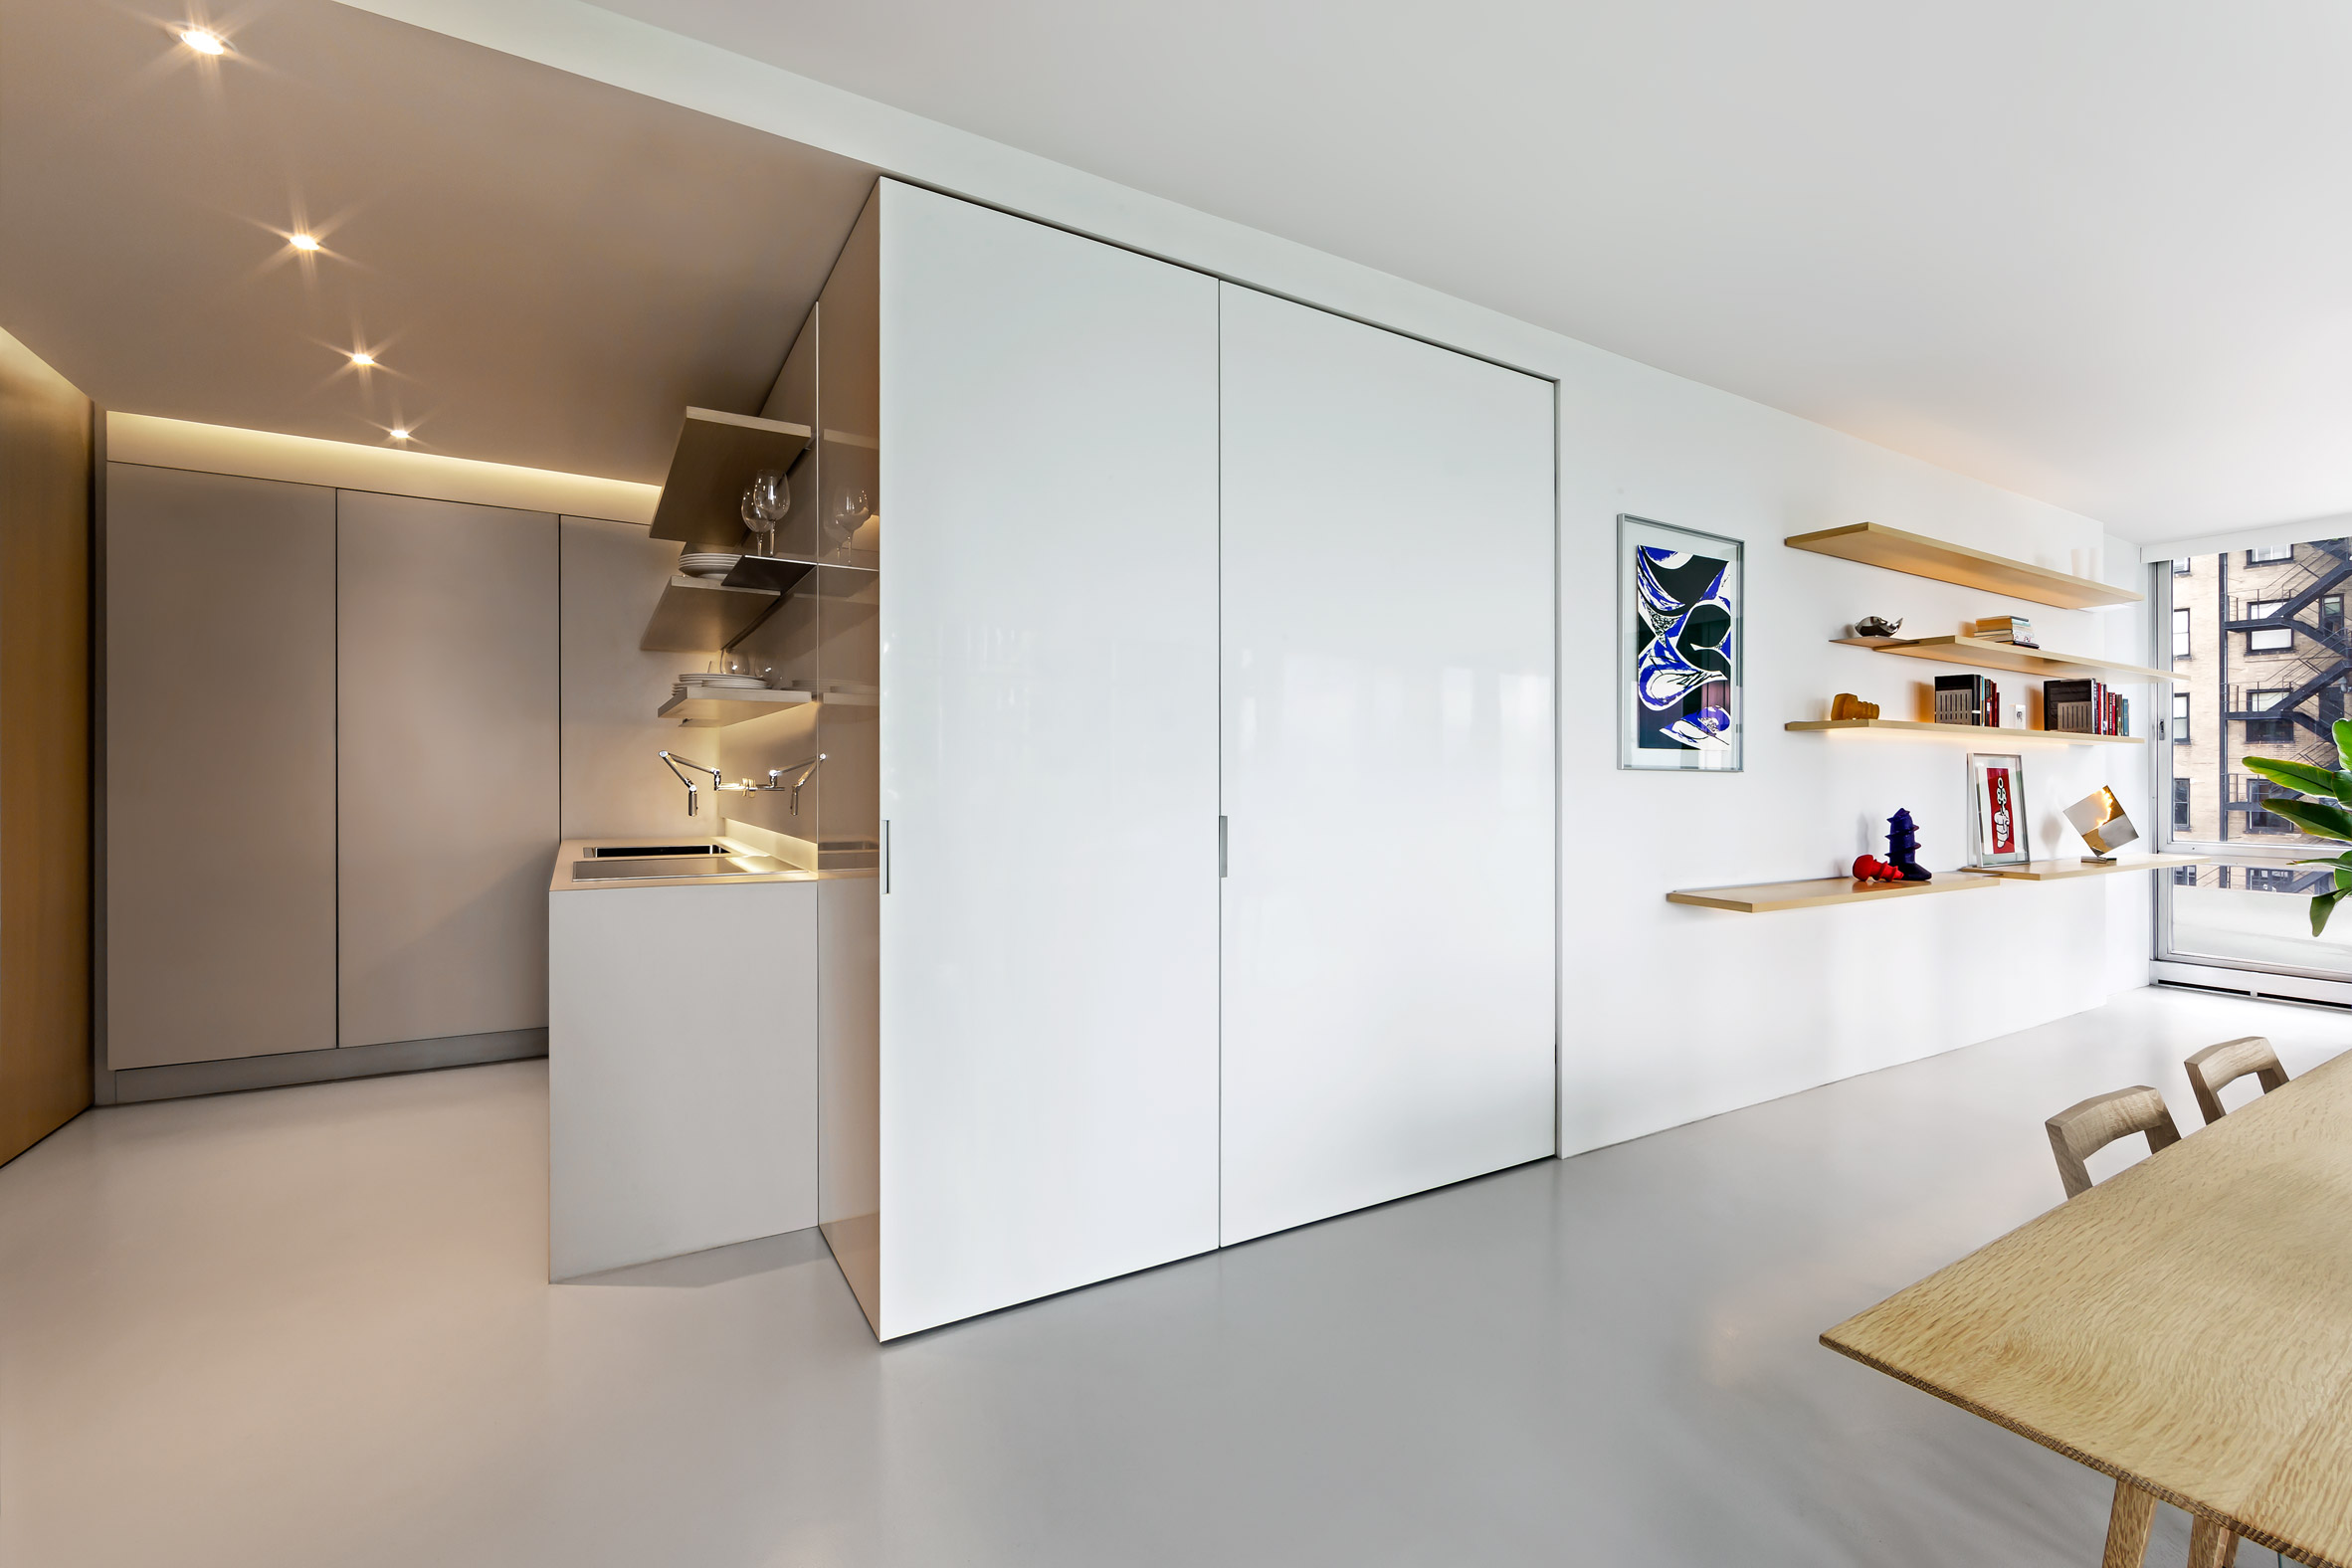 Vladimir Radutny Architects' Unit 3E apartment in Chicago